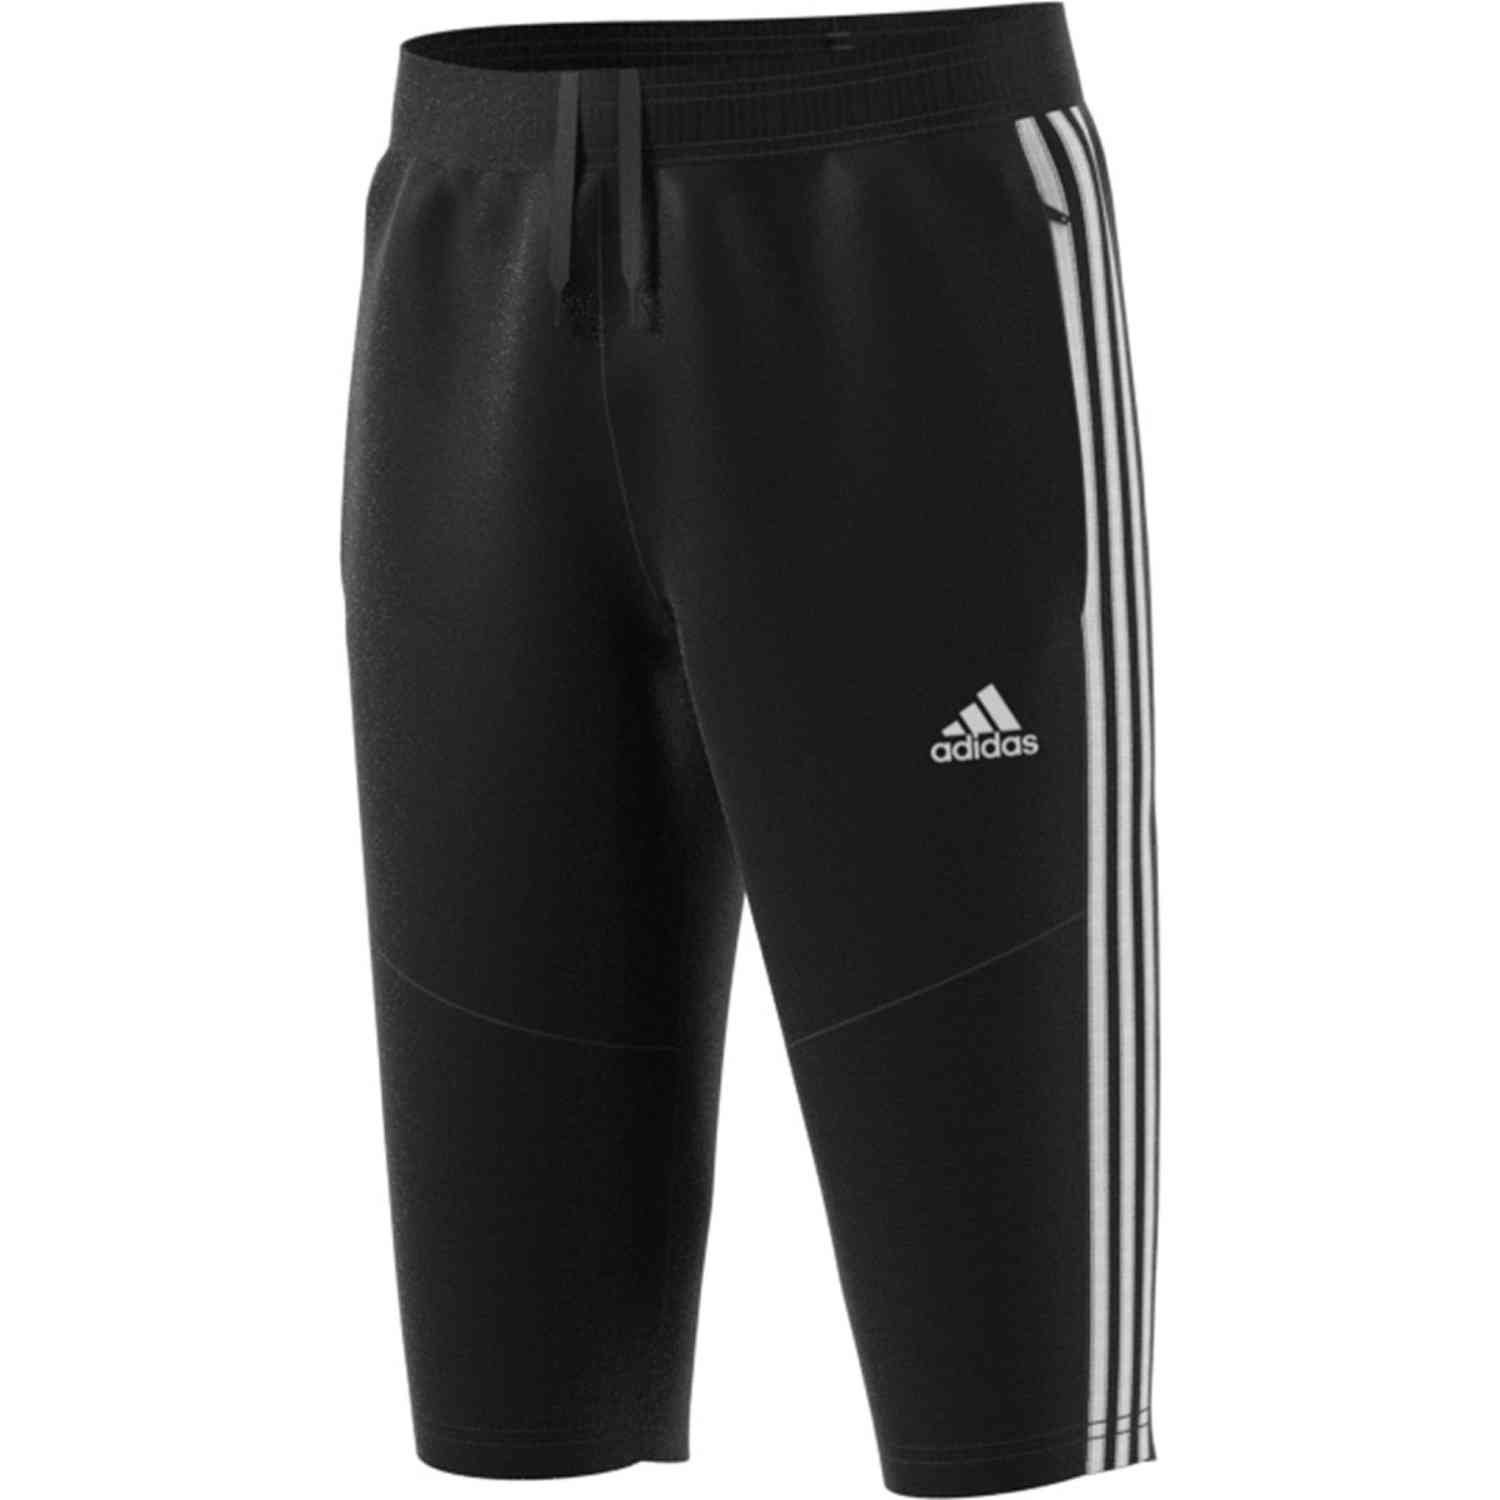 Kids adidas Tiro 19 3/4 Pants - Black/White - SoccerPro